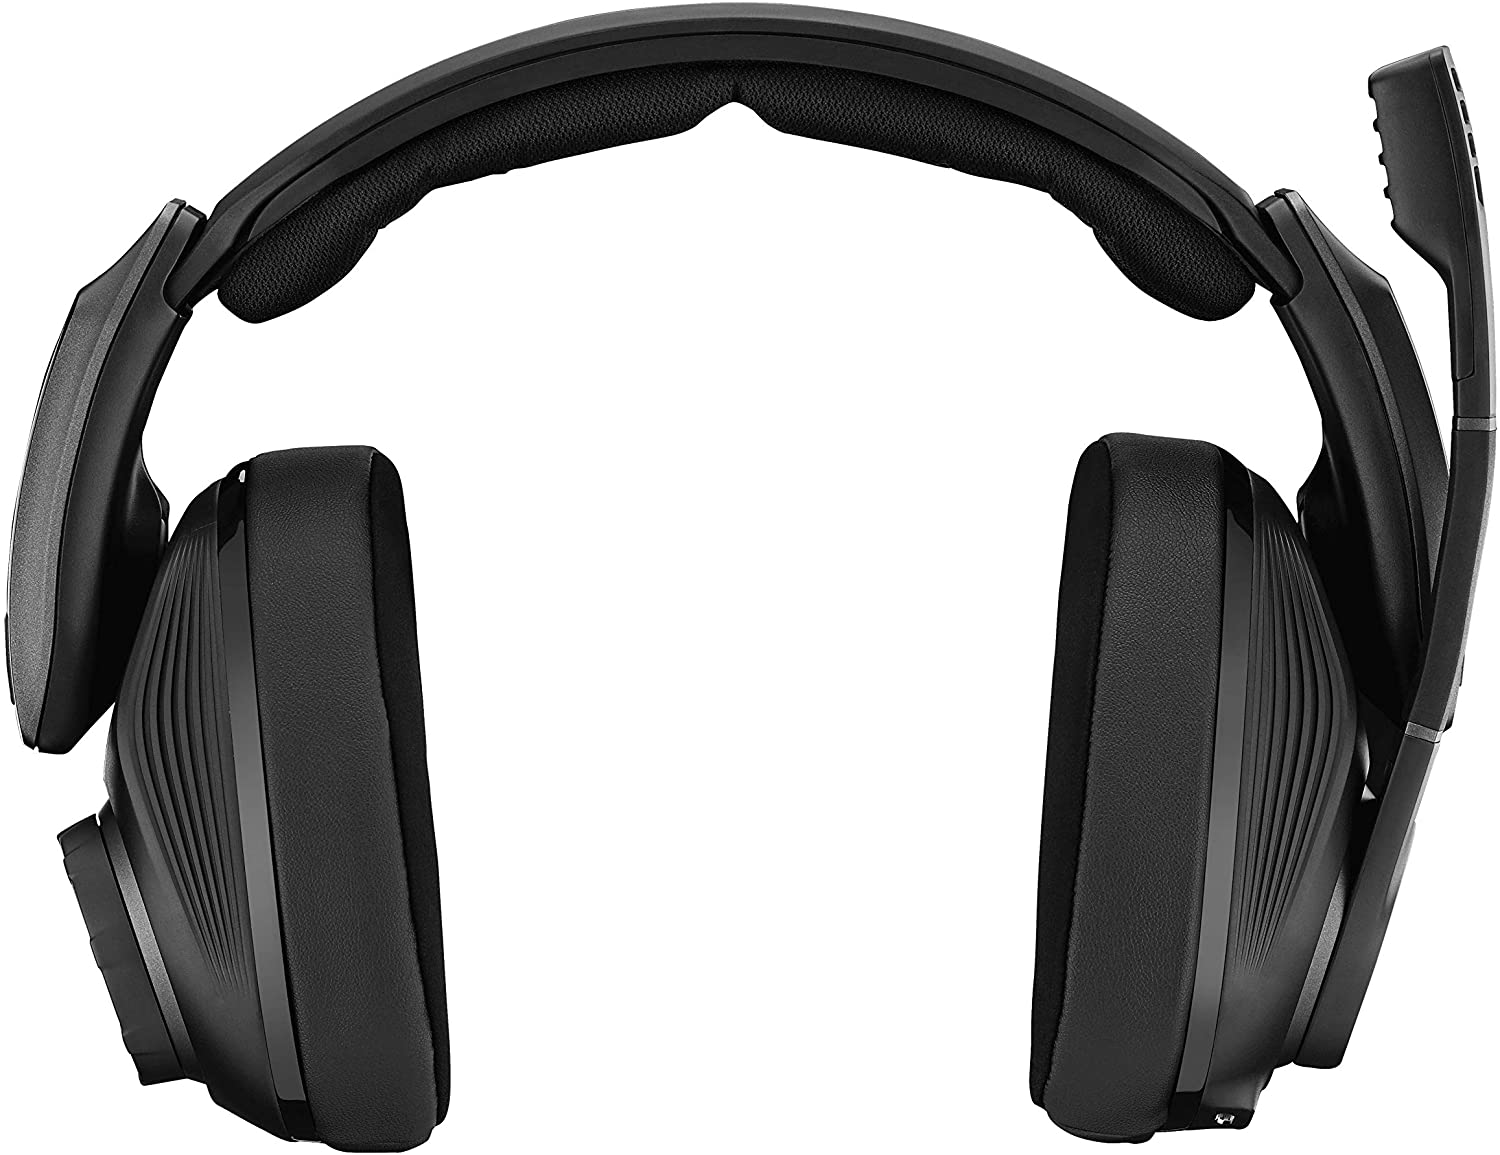 epos-senneiser-gsp-670-bluetooth-gaming-headset-black-2